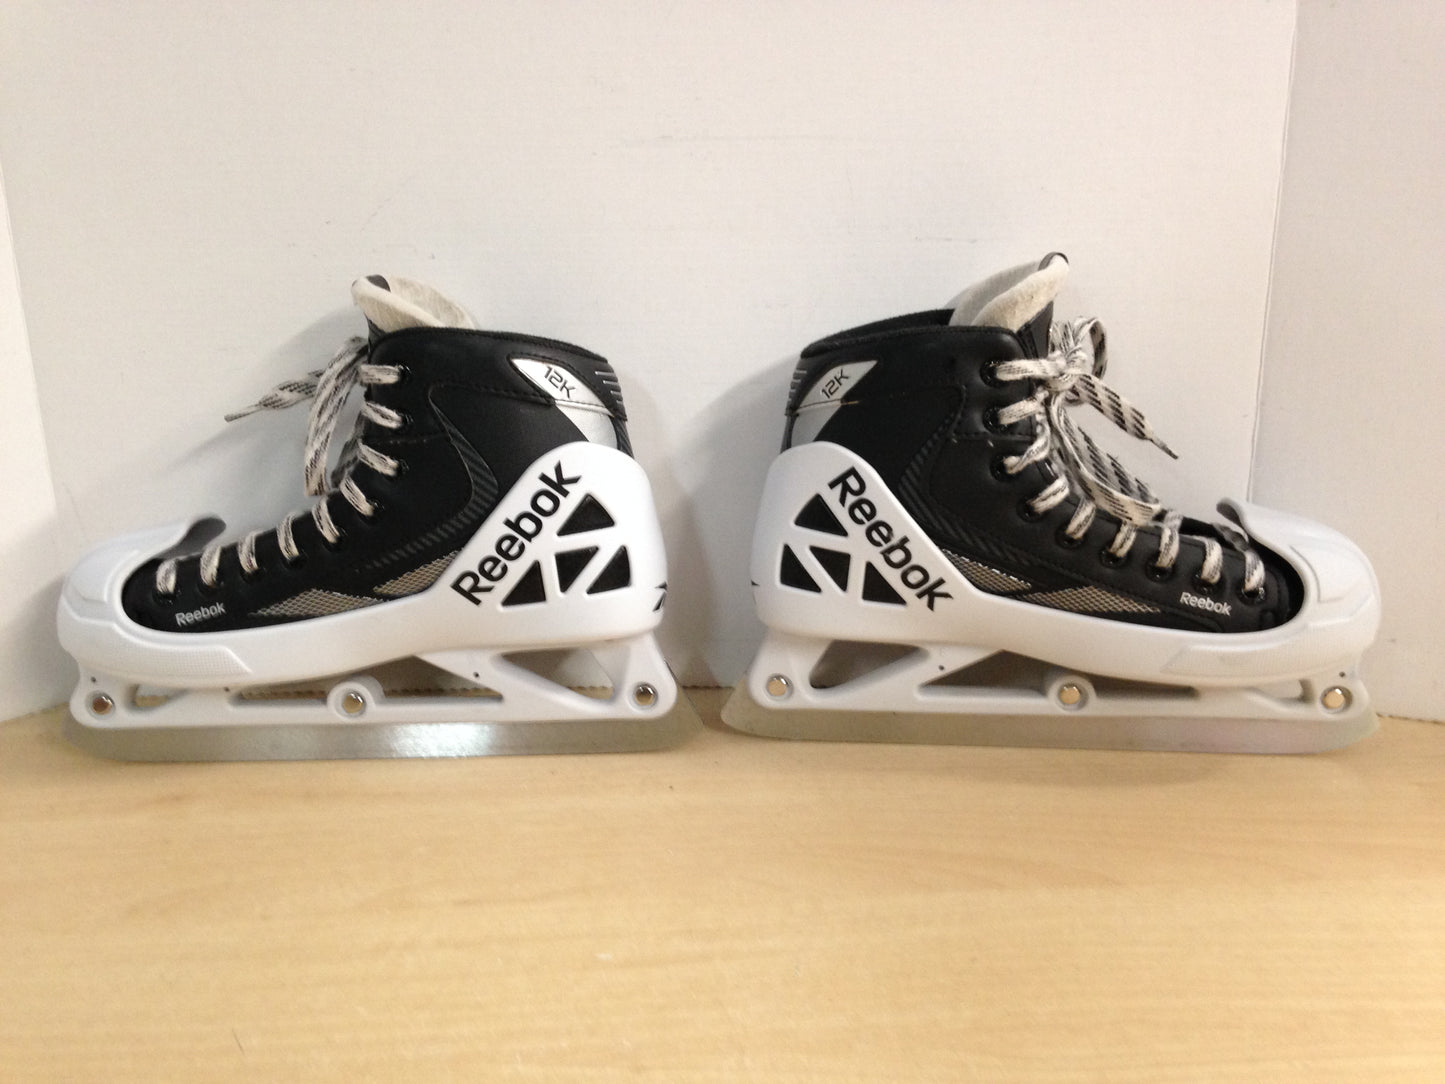 Hockey Goalie Skates Men's Size 7.5 Shoe Size Reebok 12K